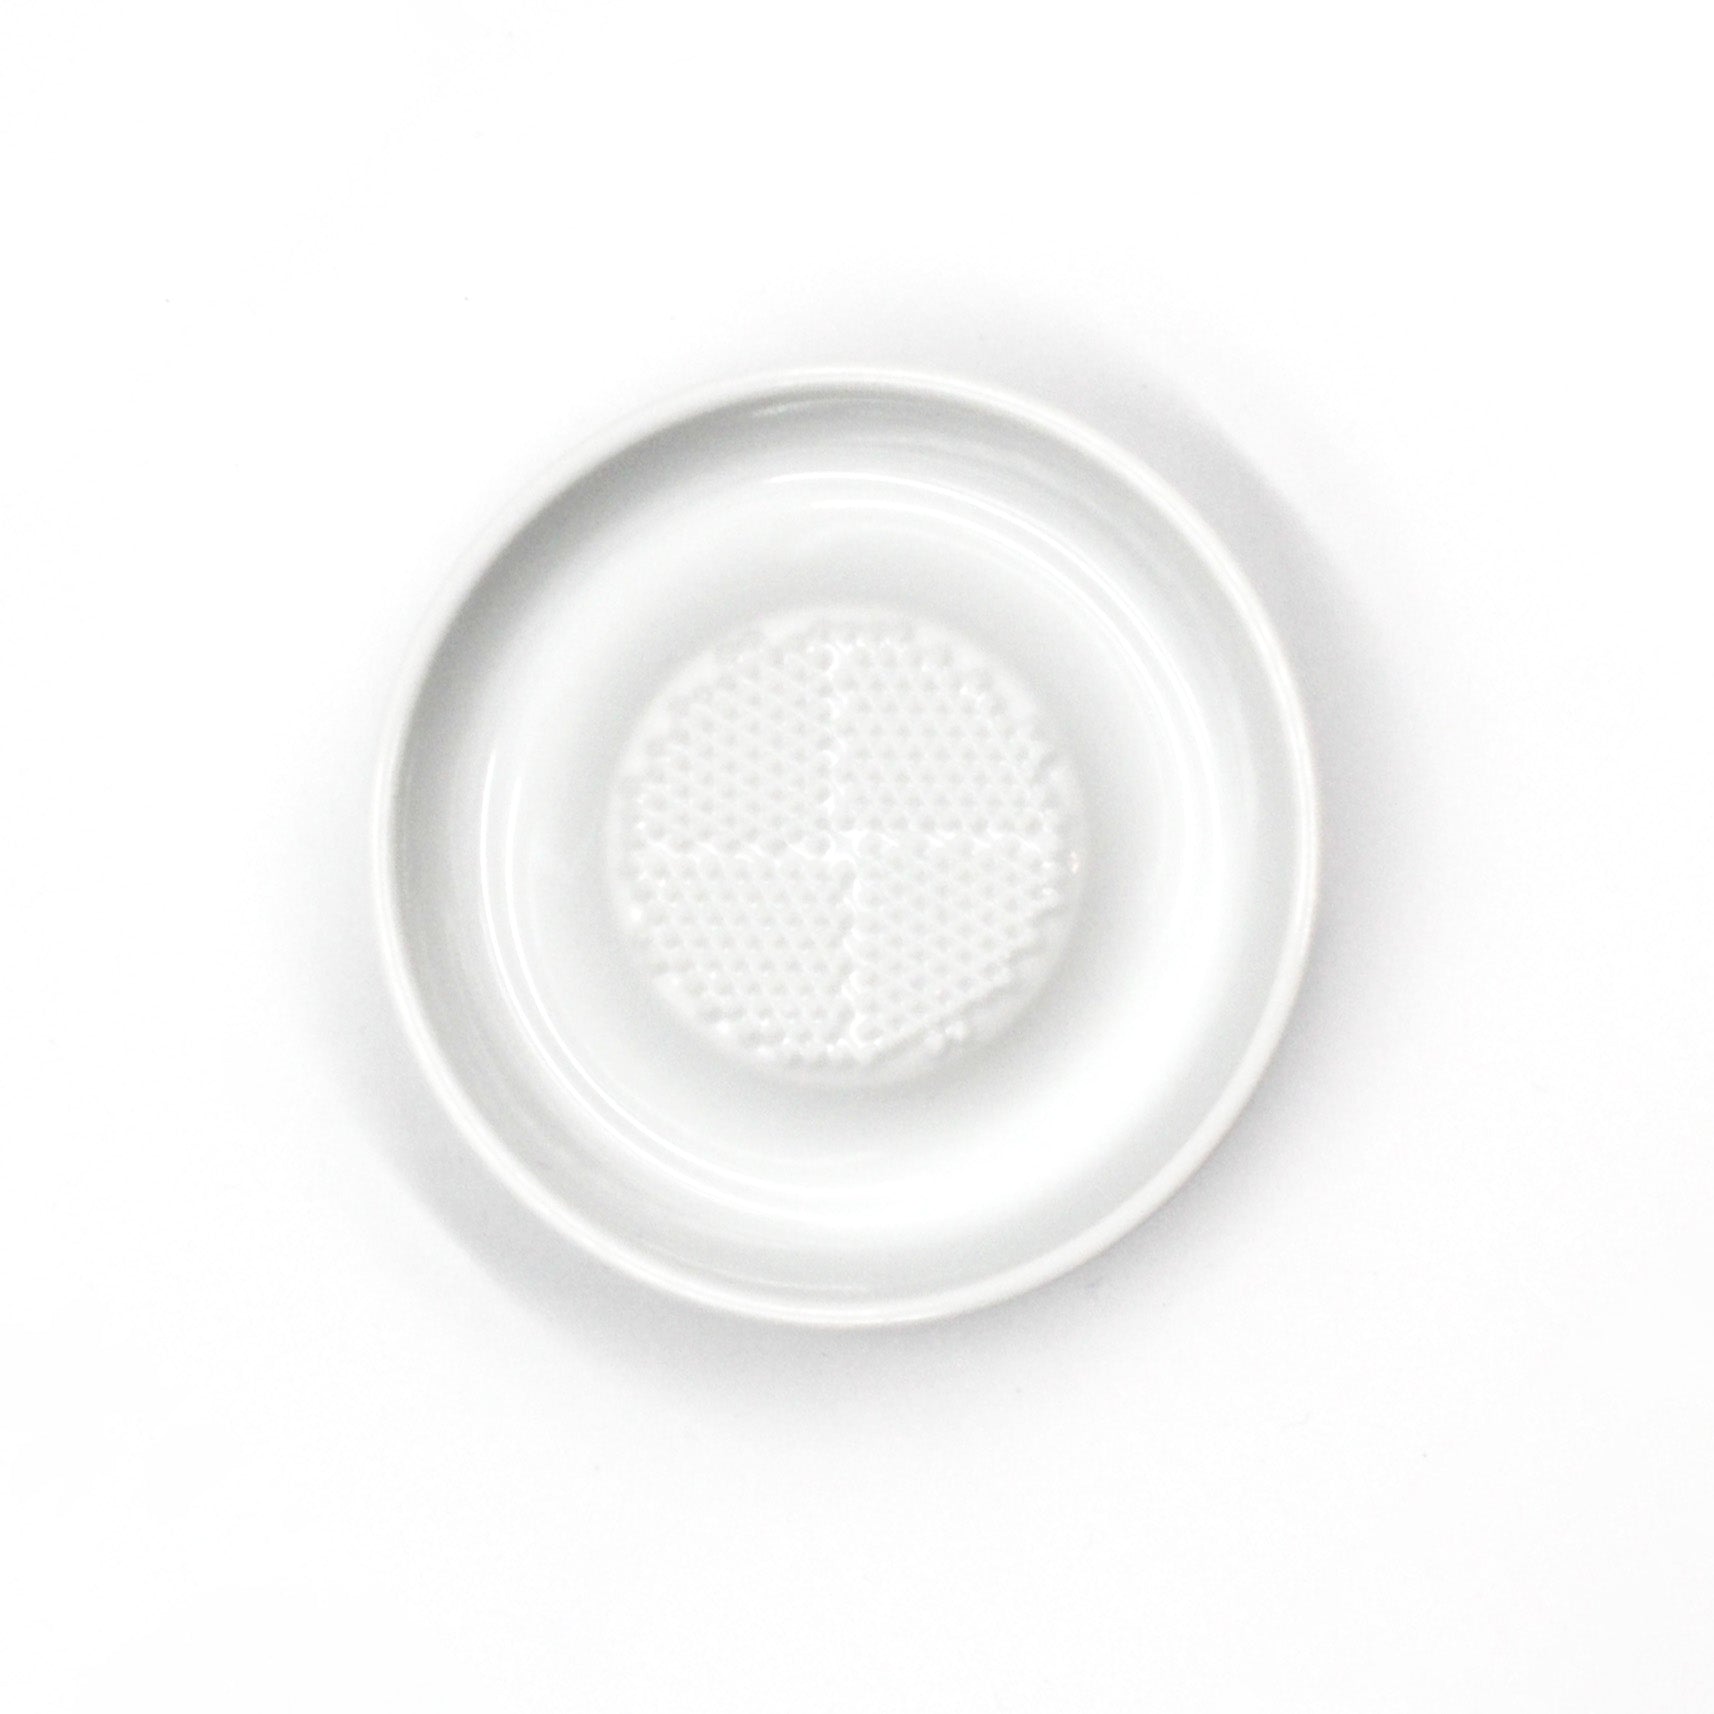 The Grate Plate Ceramic Grater: White